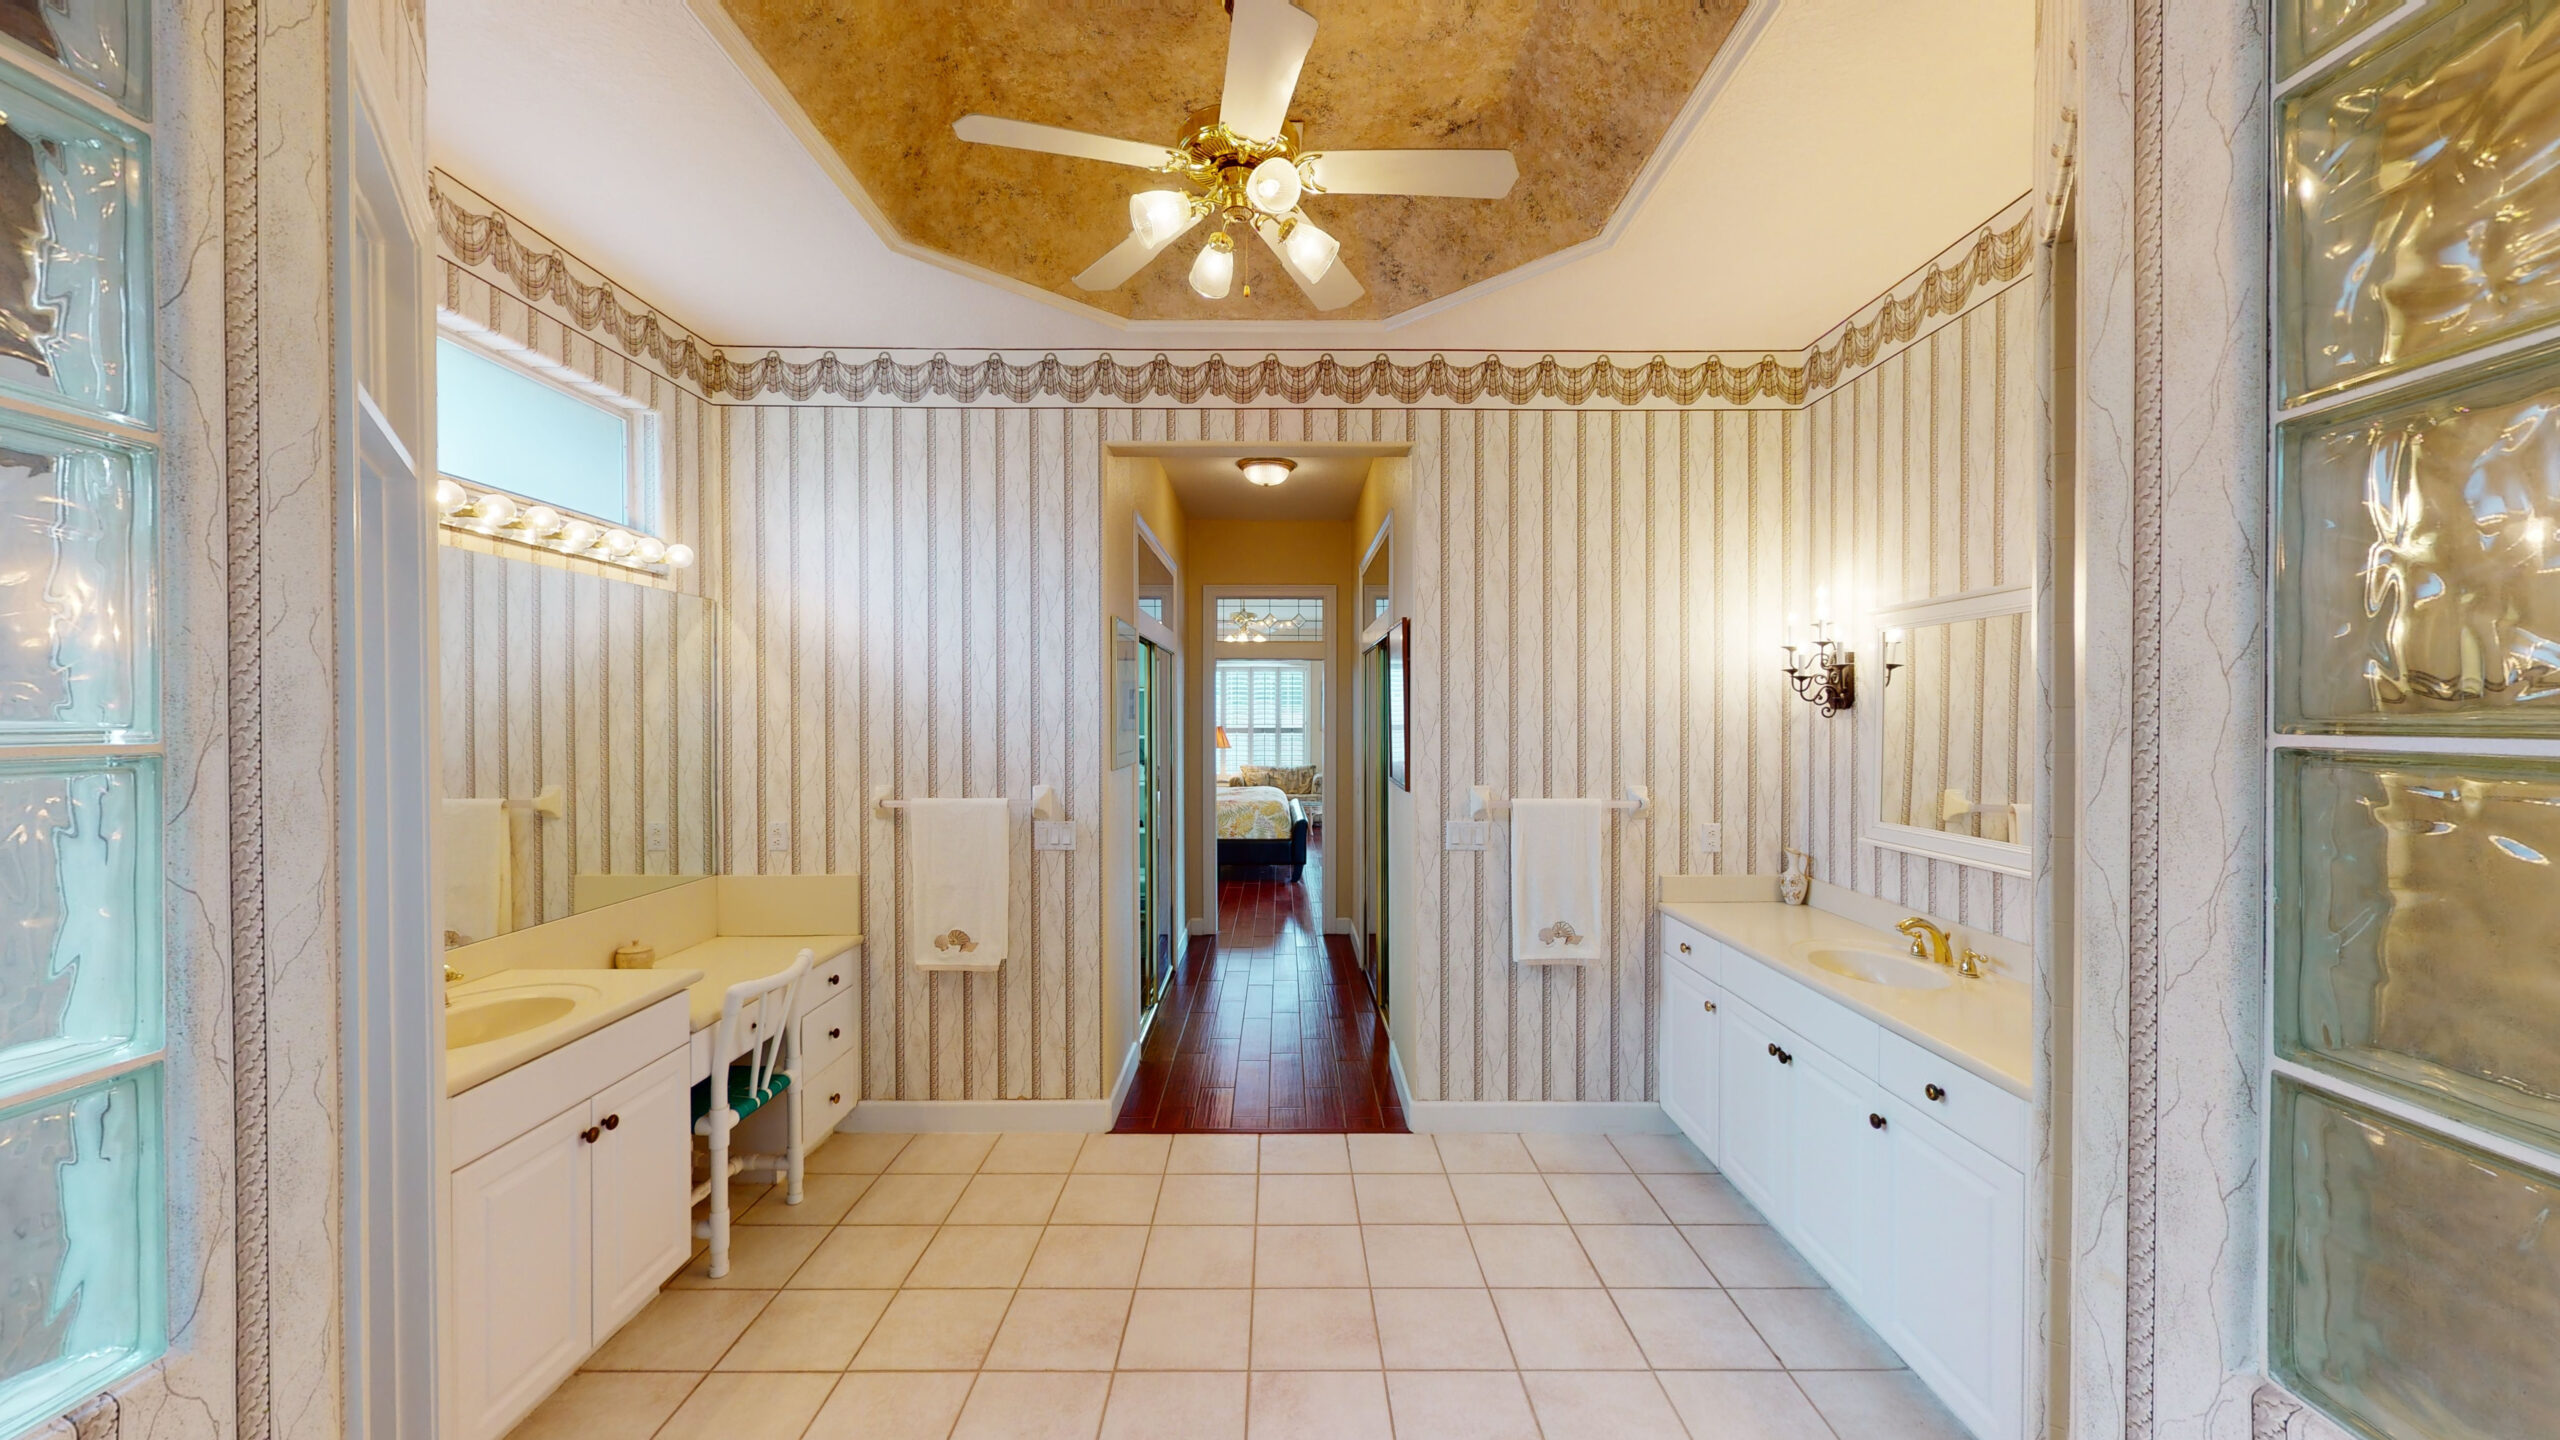 A white bathroom with a fancy ceiling fan